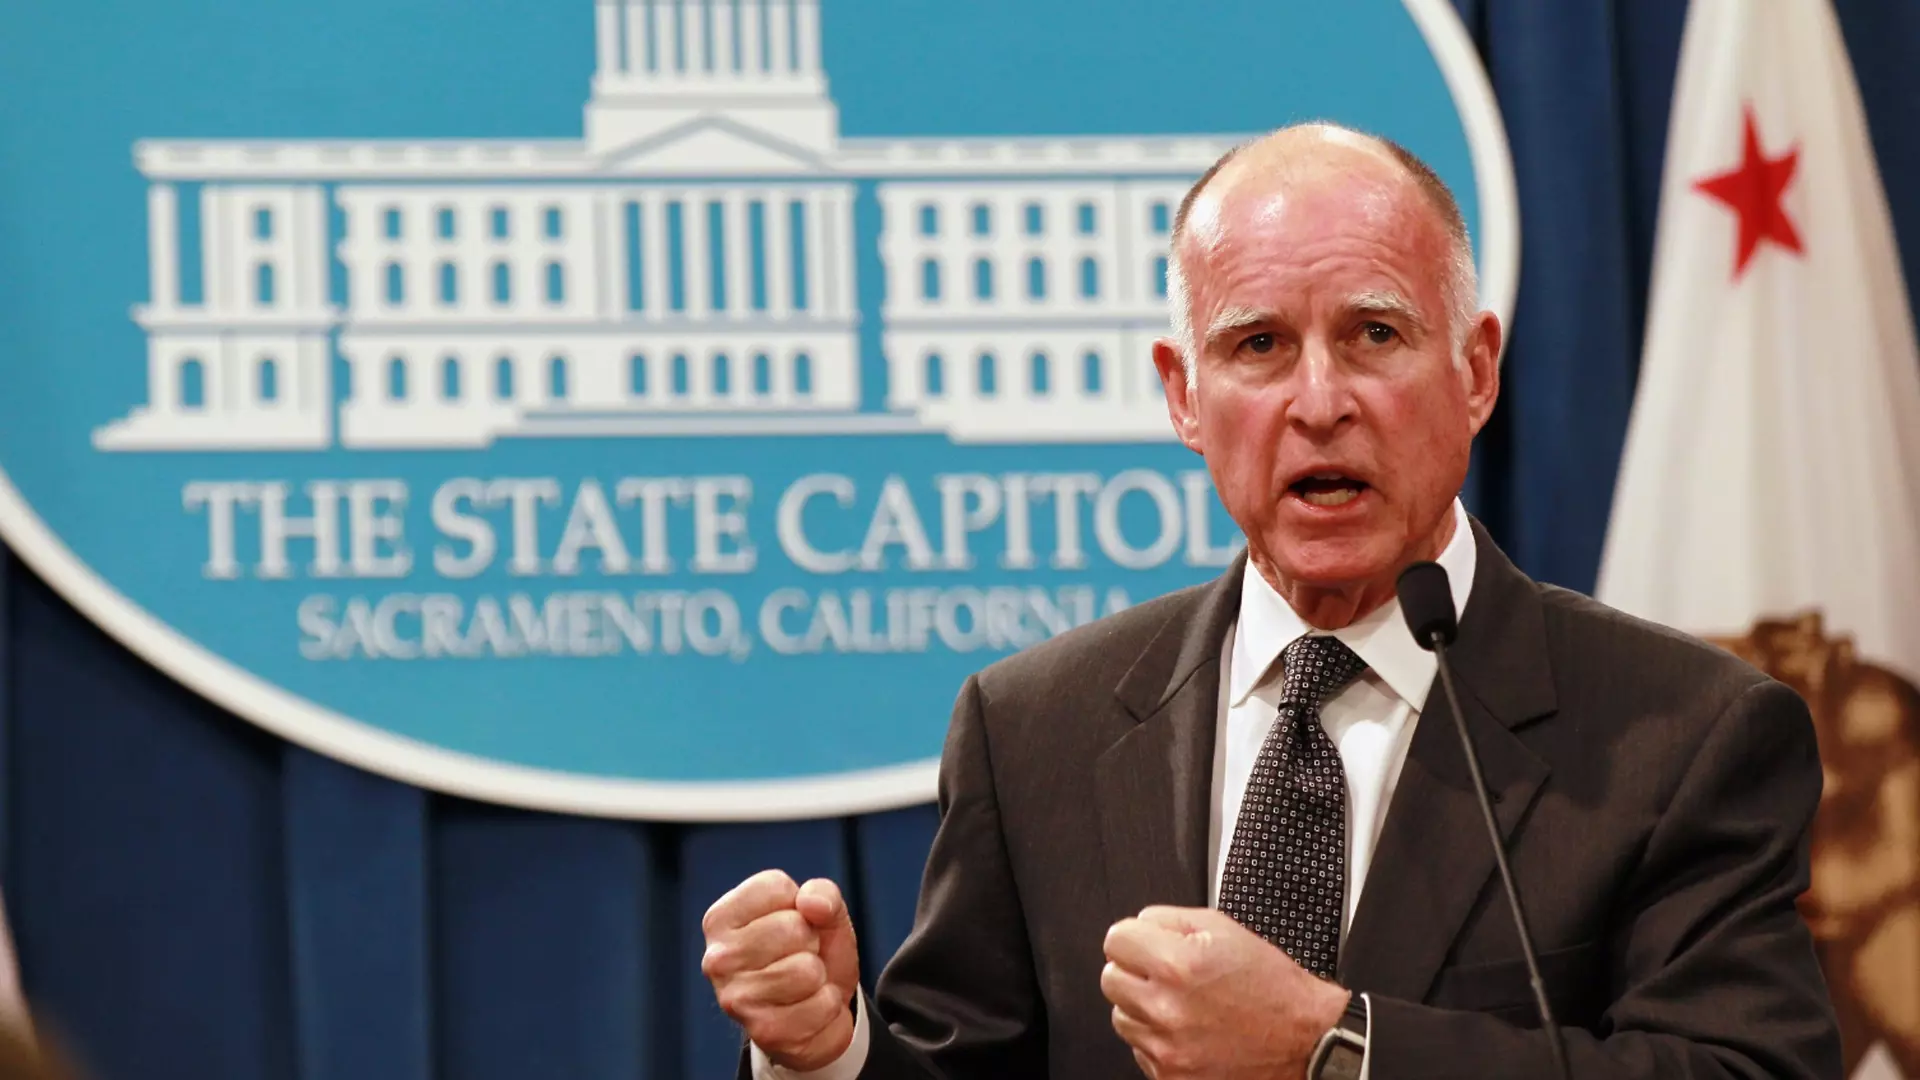 California Governor Signs Anti-Pregnancy Center Law